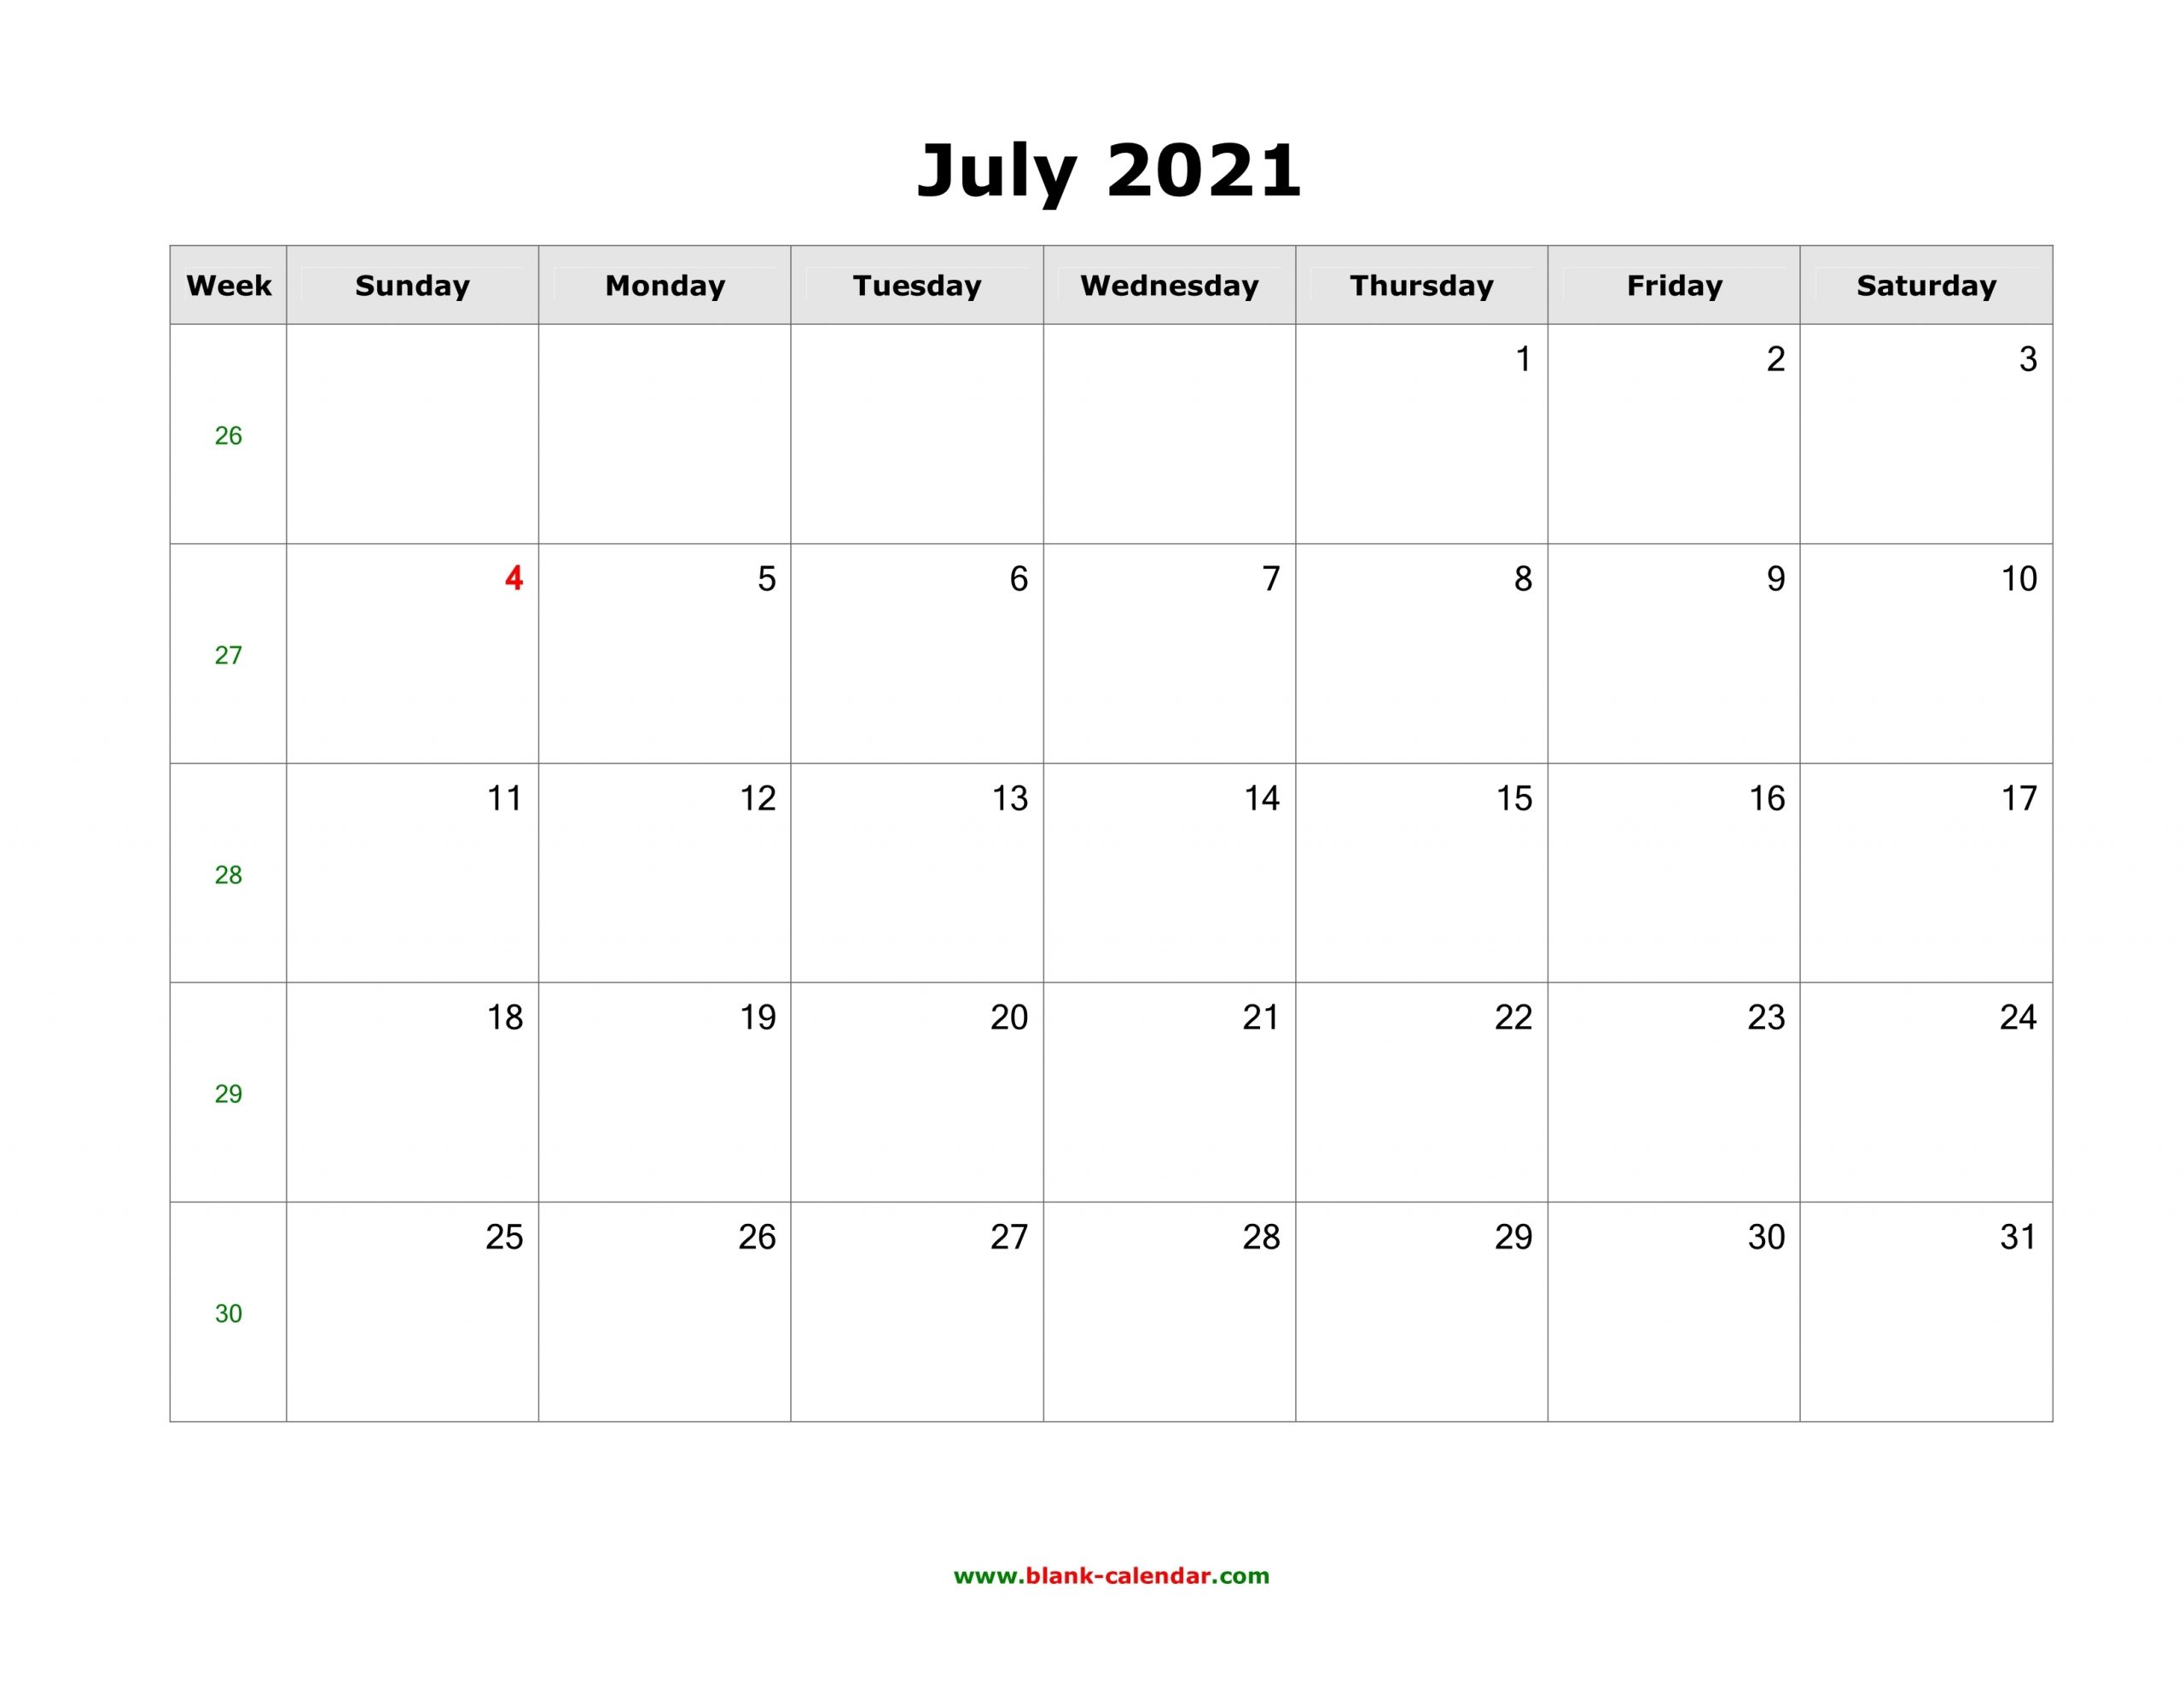 Download July 2021 Blank Calendar (Horizontal)